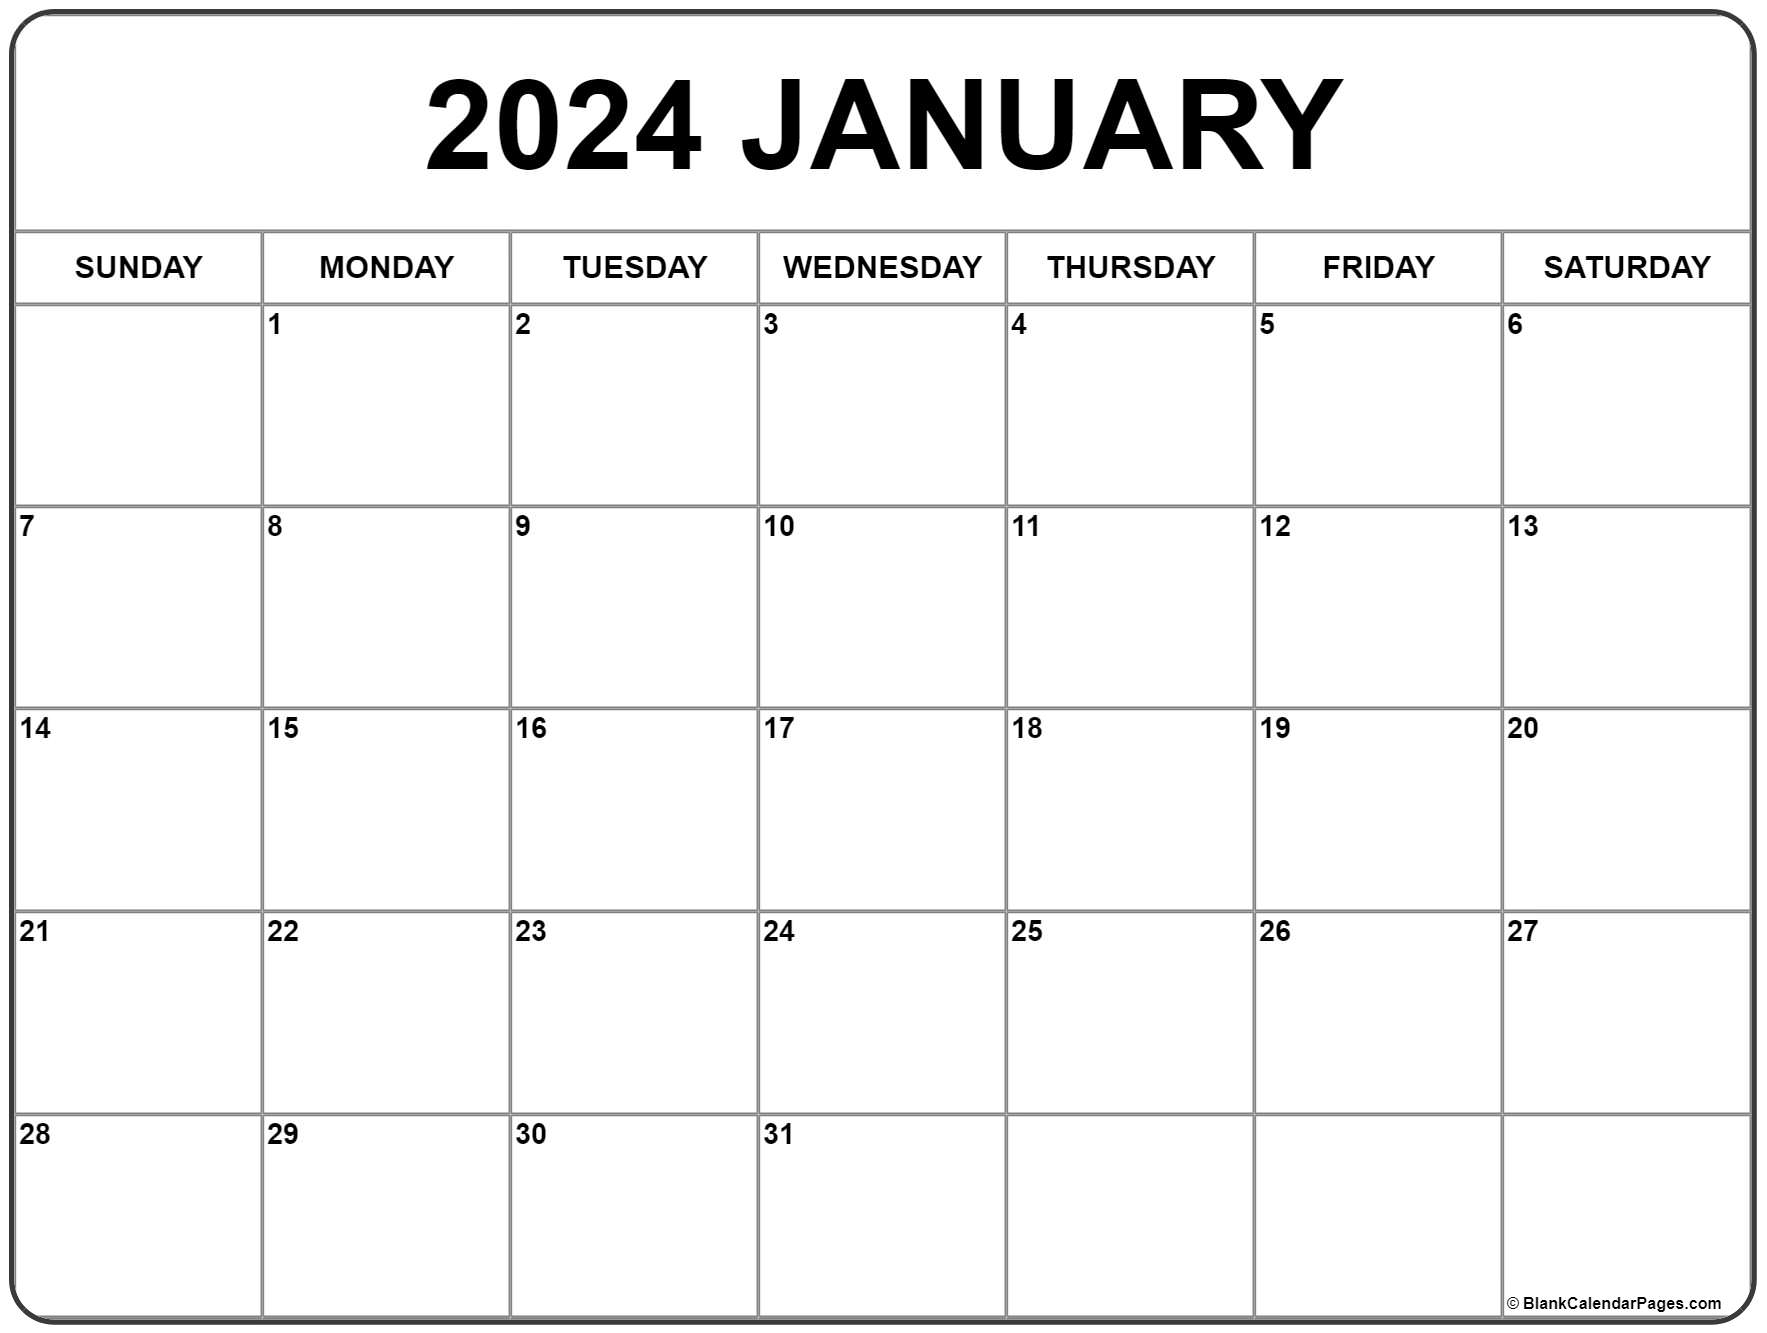 2021 Jan Calendar January 2021 calendar | free printable monthly calendars